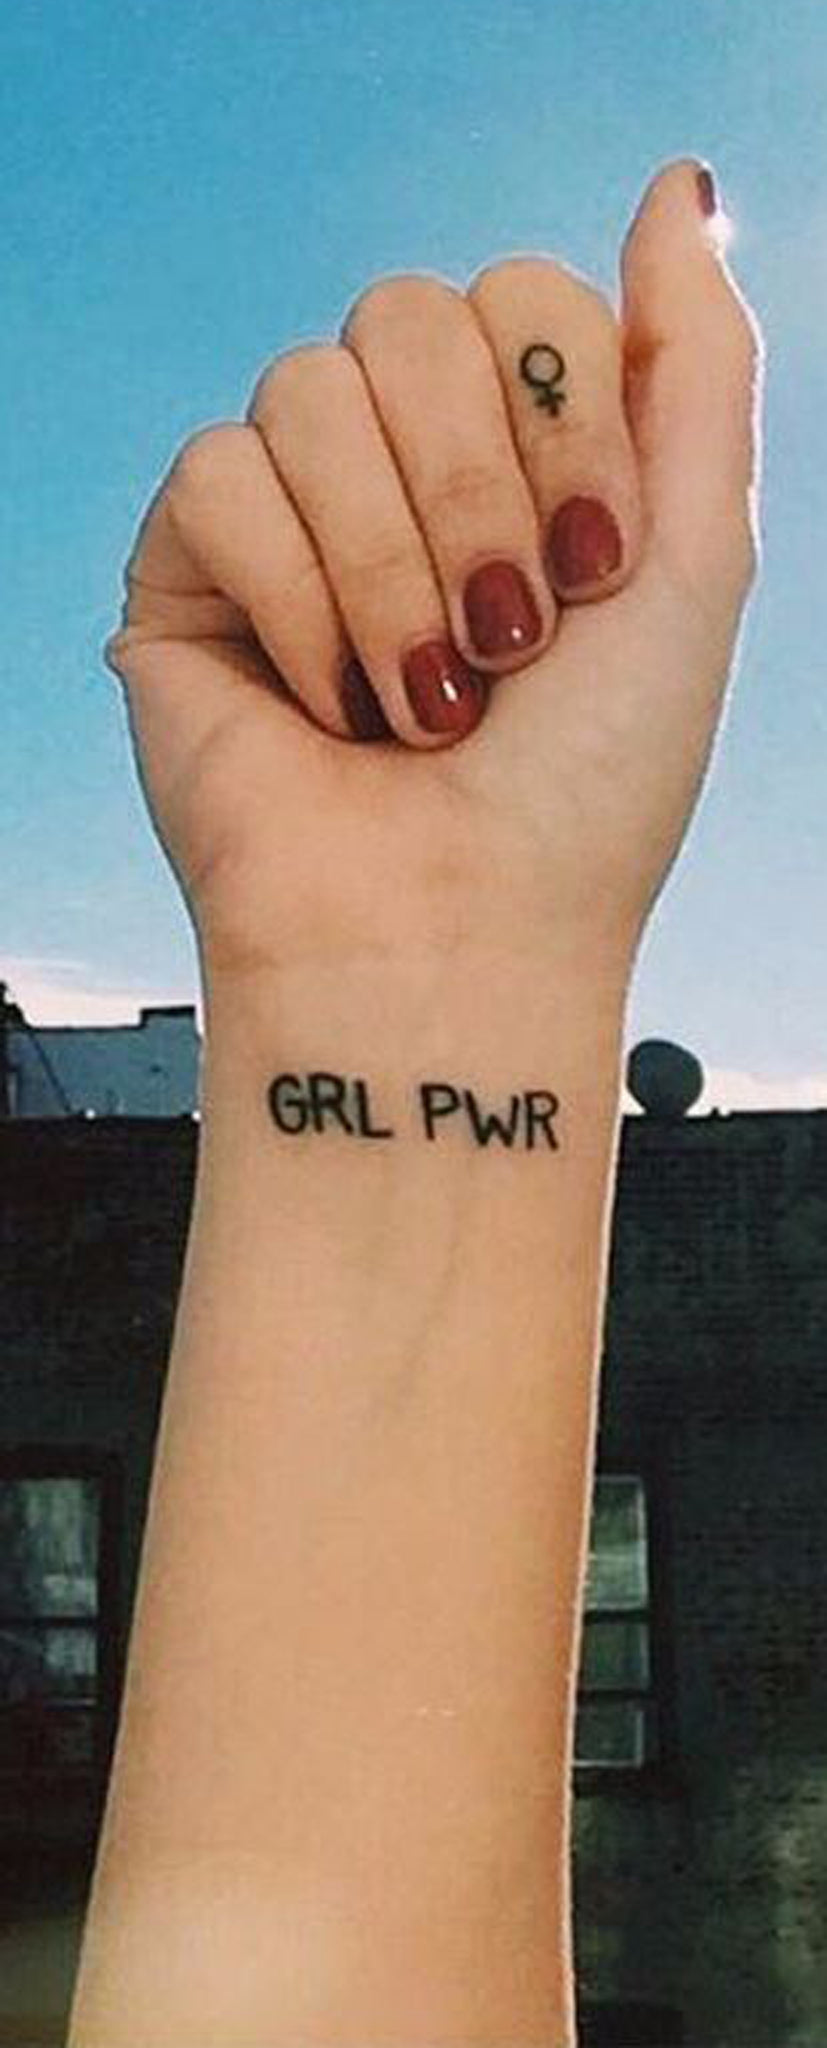 Small Wrist Tattoo Ideas for Women with Meaning - Girl Power Words Tatouage - Ideas Del Tatuaje - www.MyBodiart.com